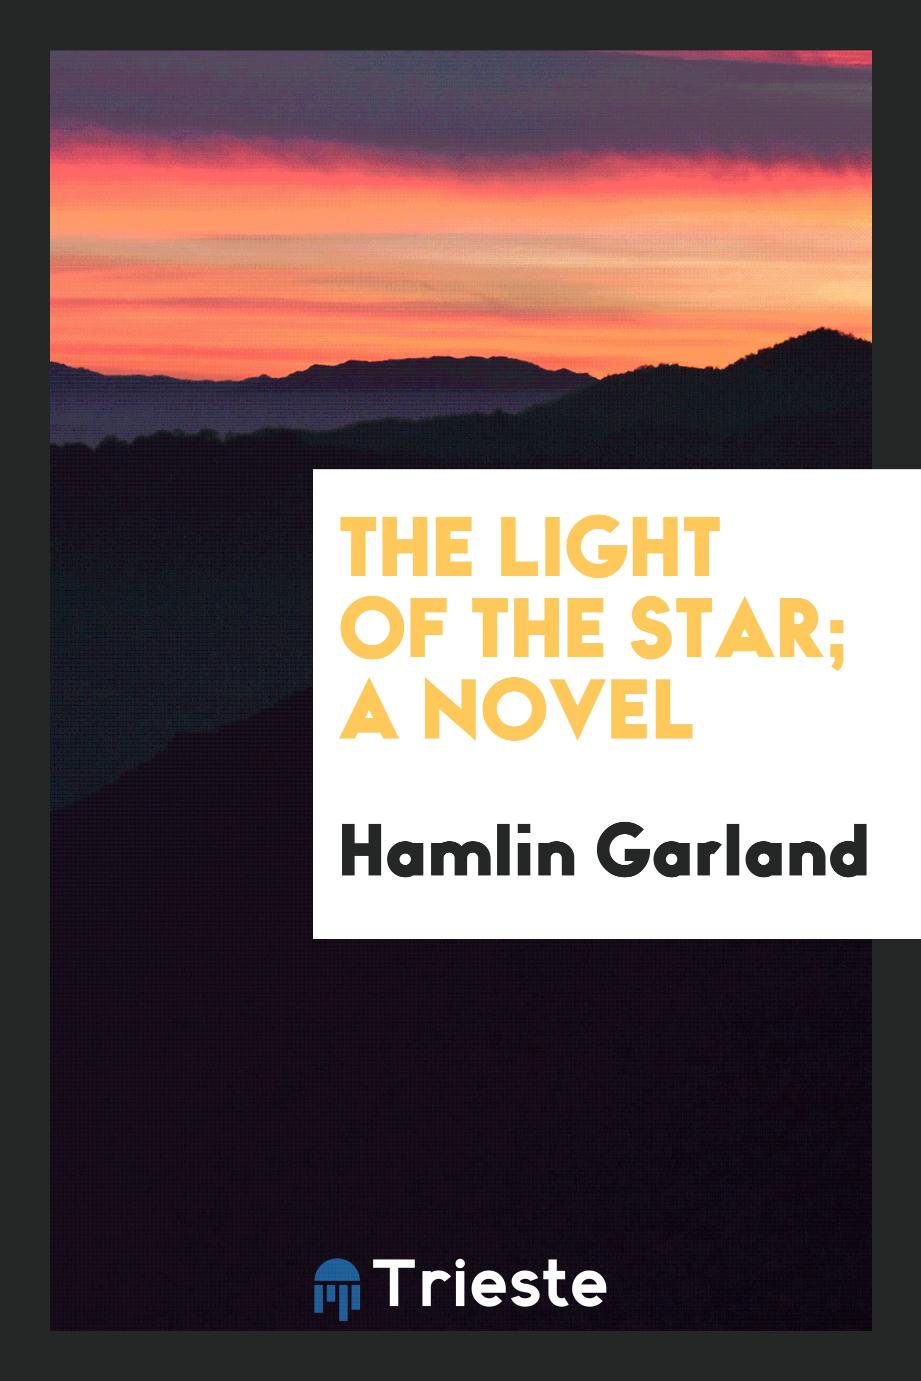 The light of the star; a novel